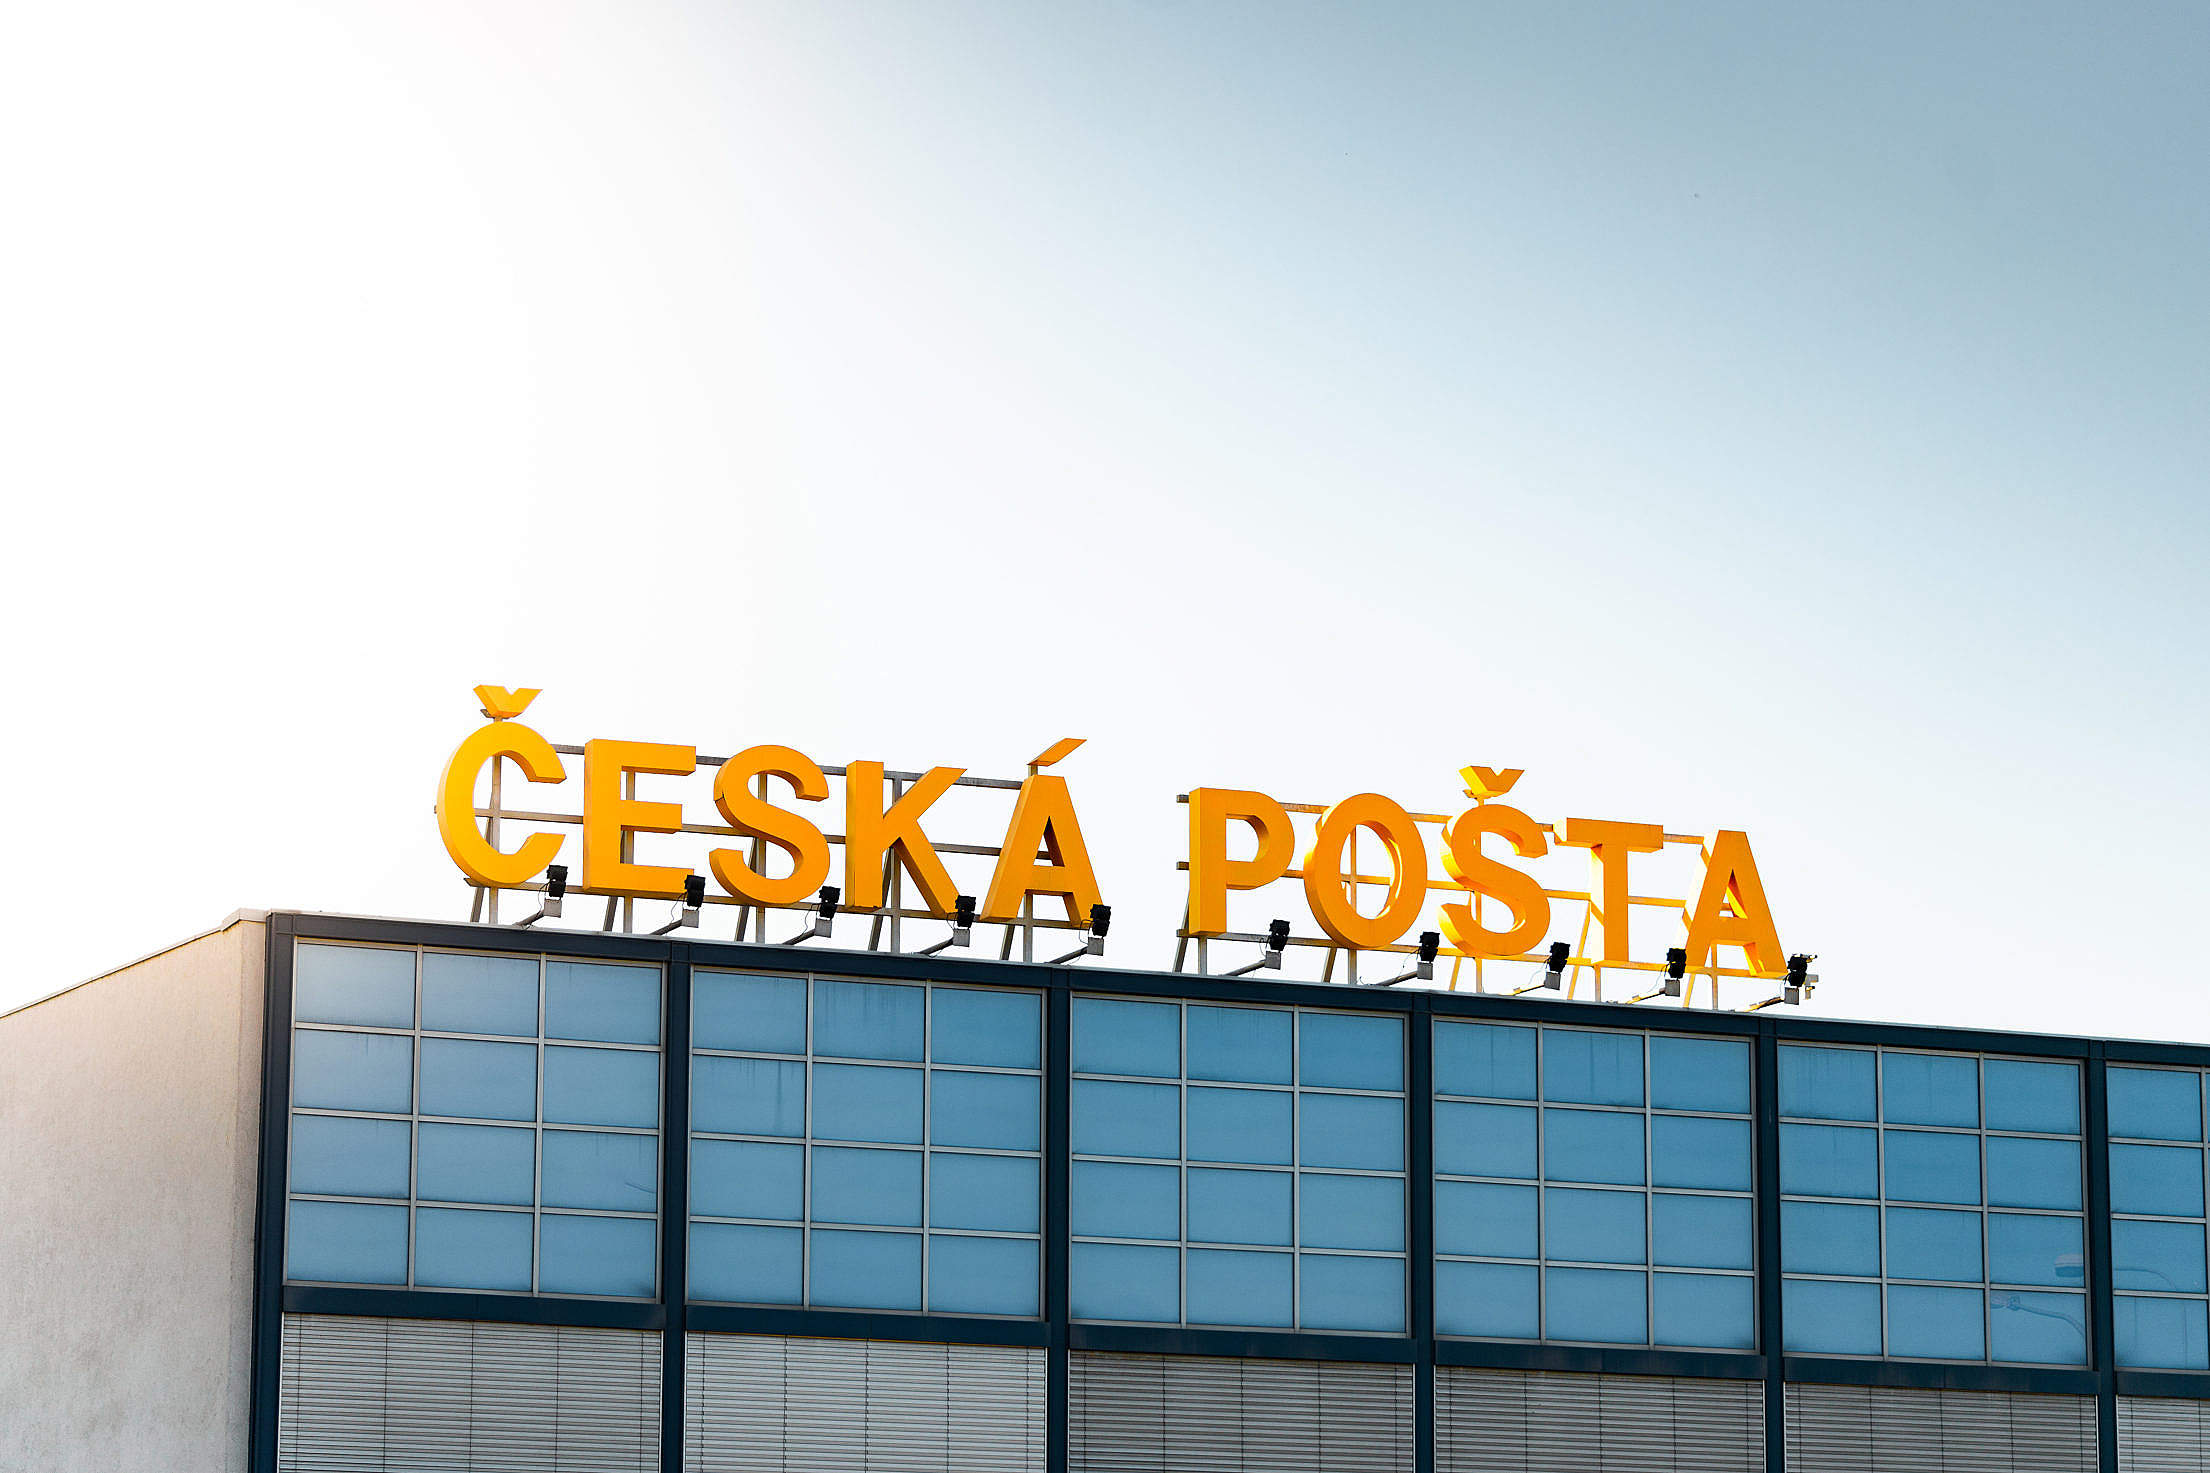 Czech Post Building Ceska Posta Free Stock Photo